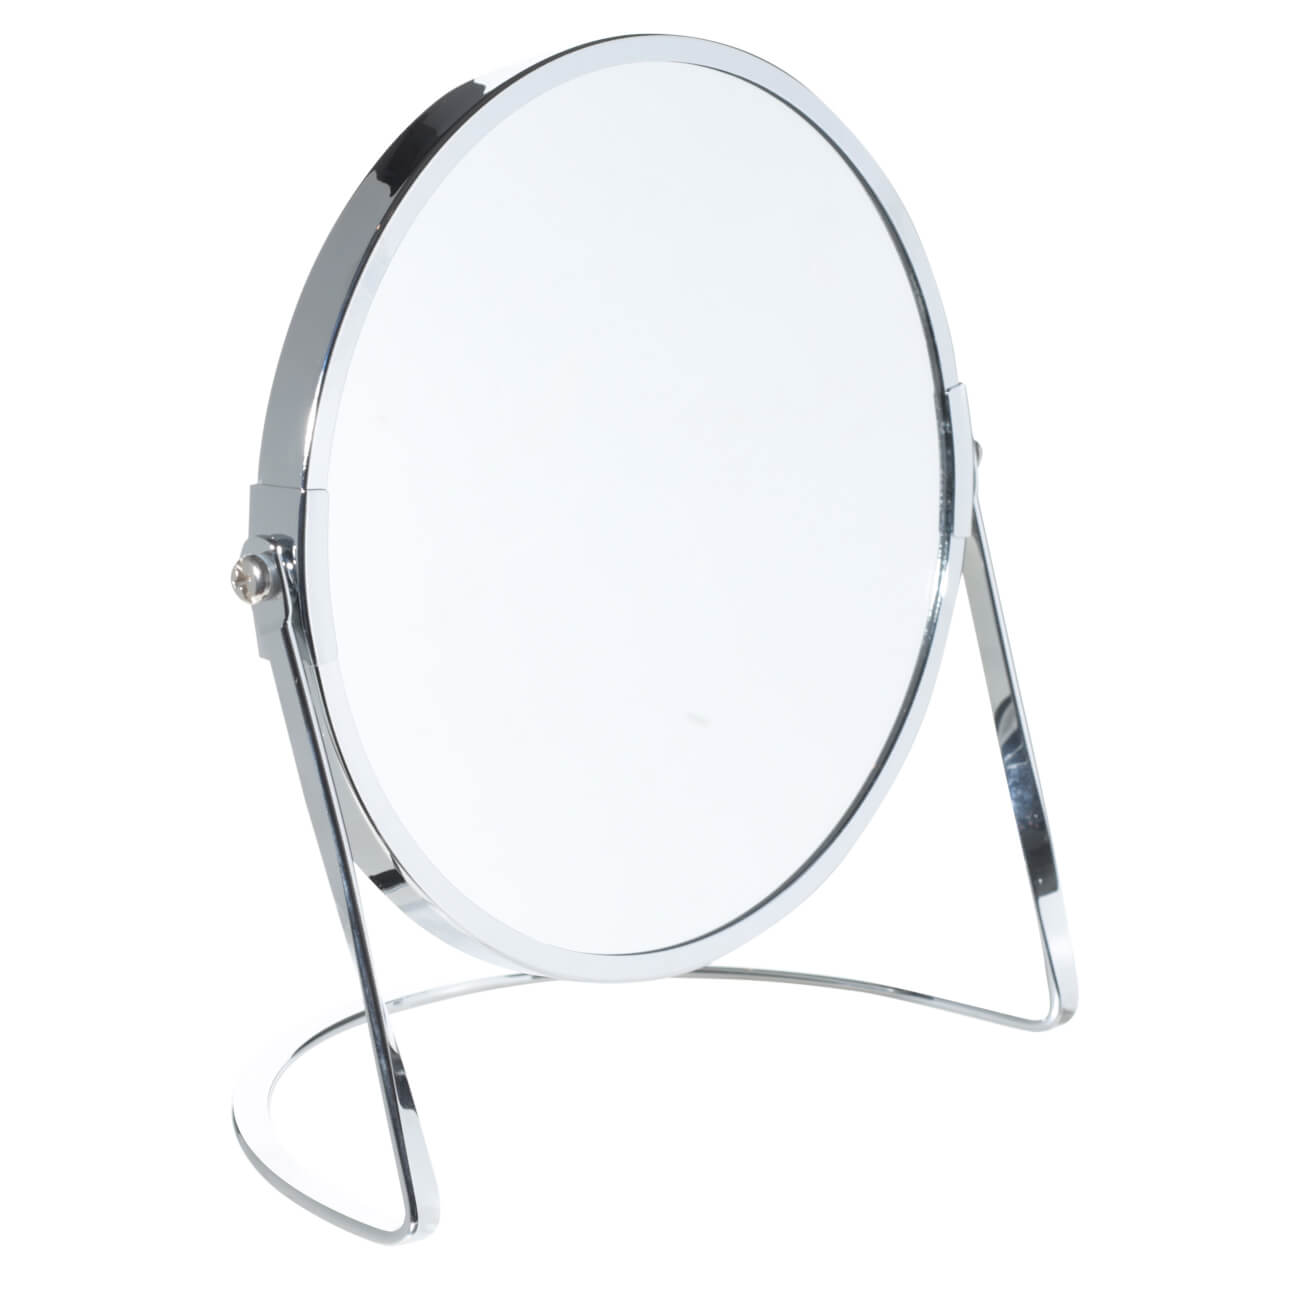 Зеркало настольное, 20х17 см, двустороннее, металл, круглое, Fantastic двустороннее косметическое зеркало unistor